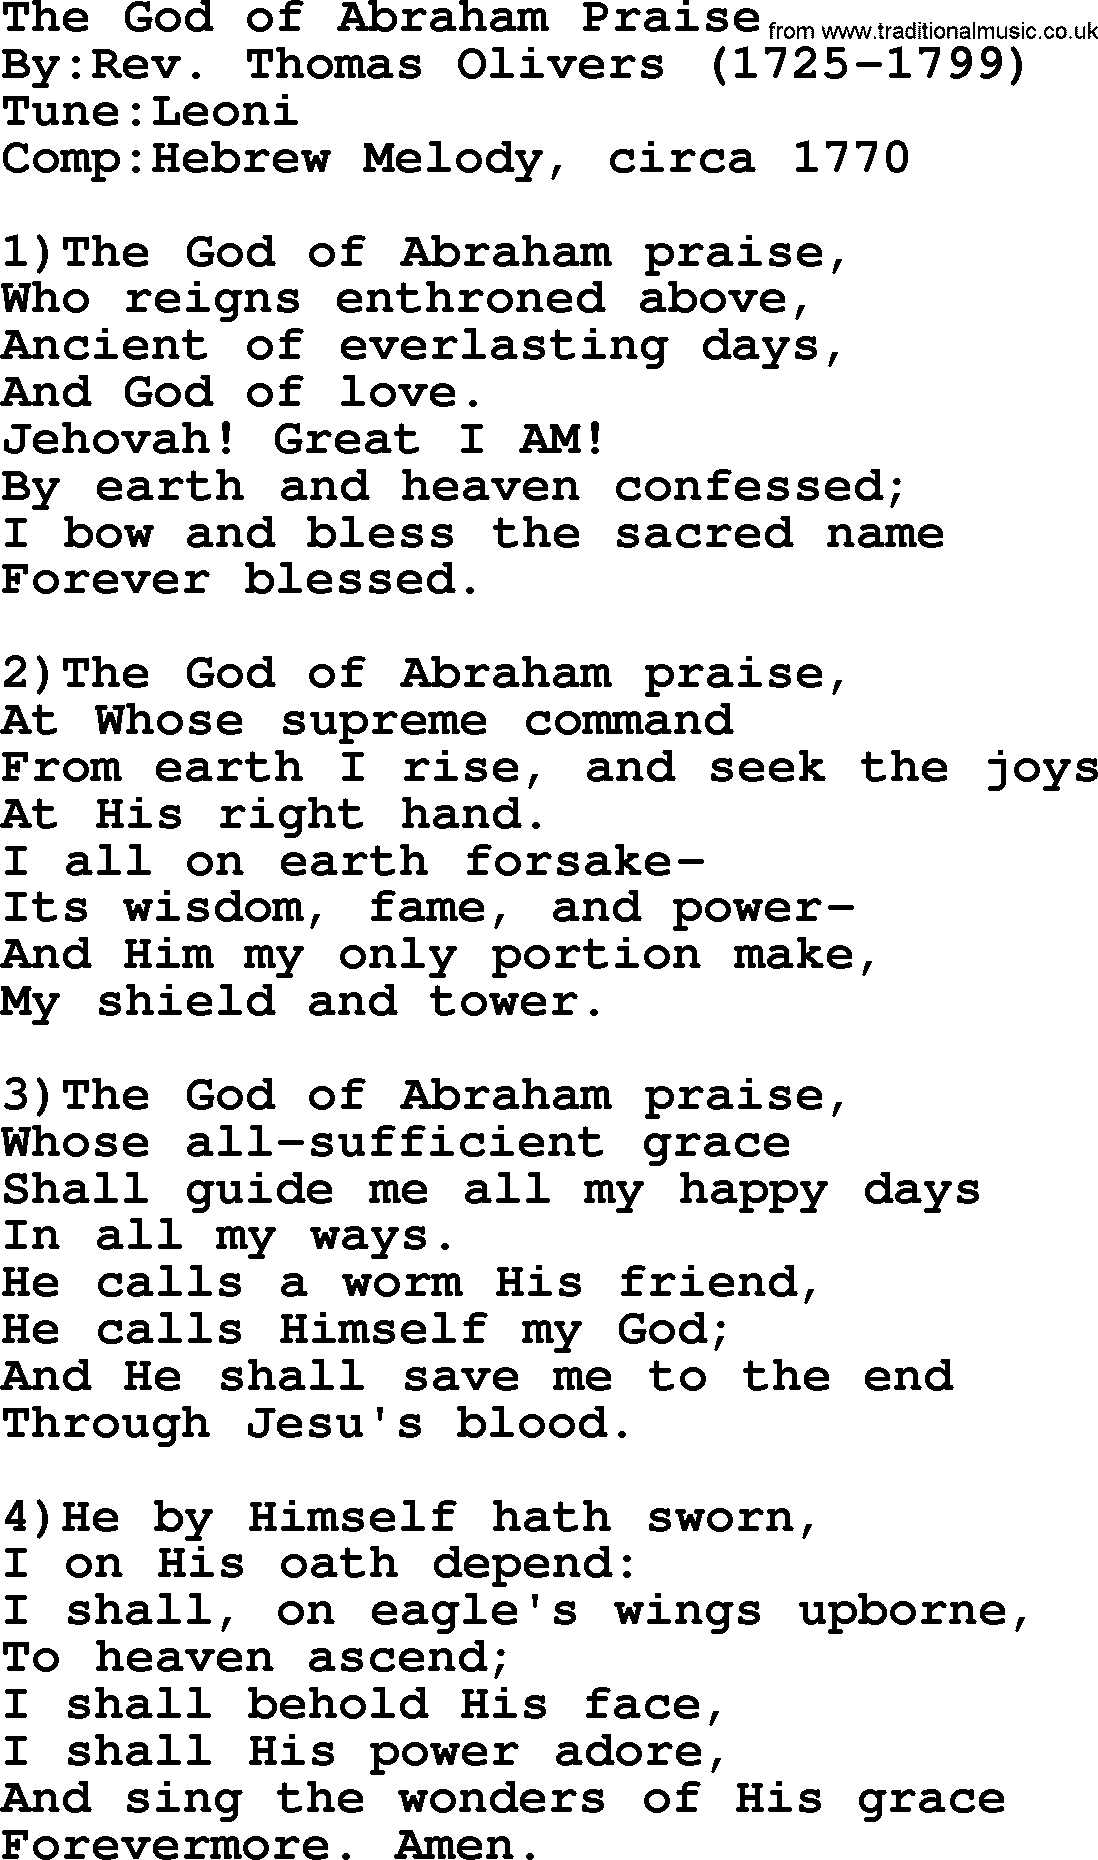 Methodist Hymn: The God Of Abraham Praise, lyrics